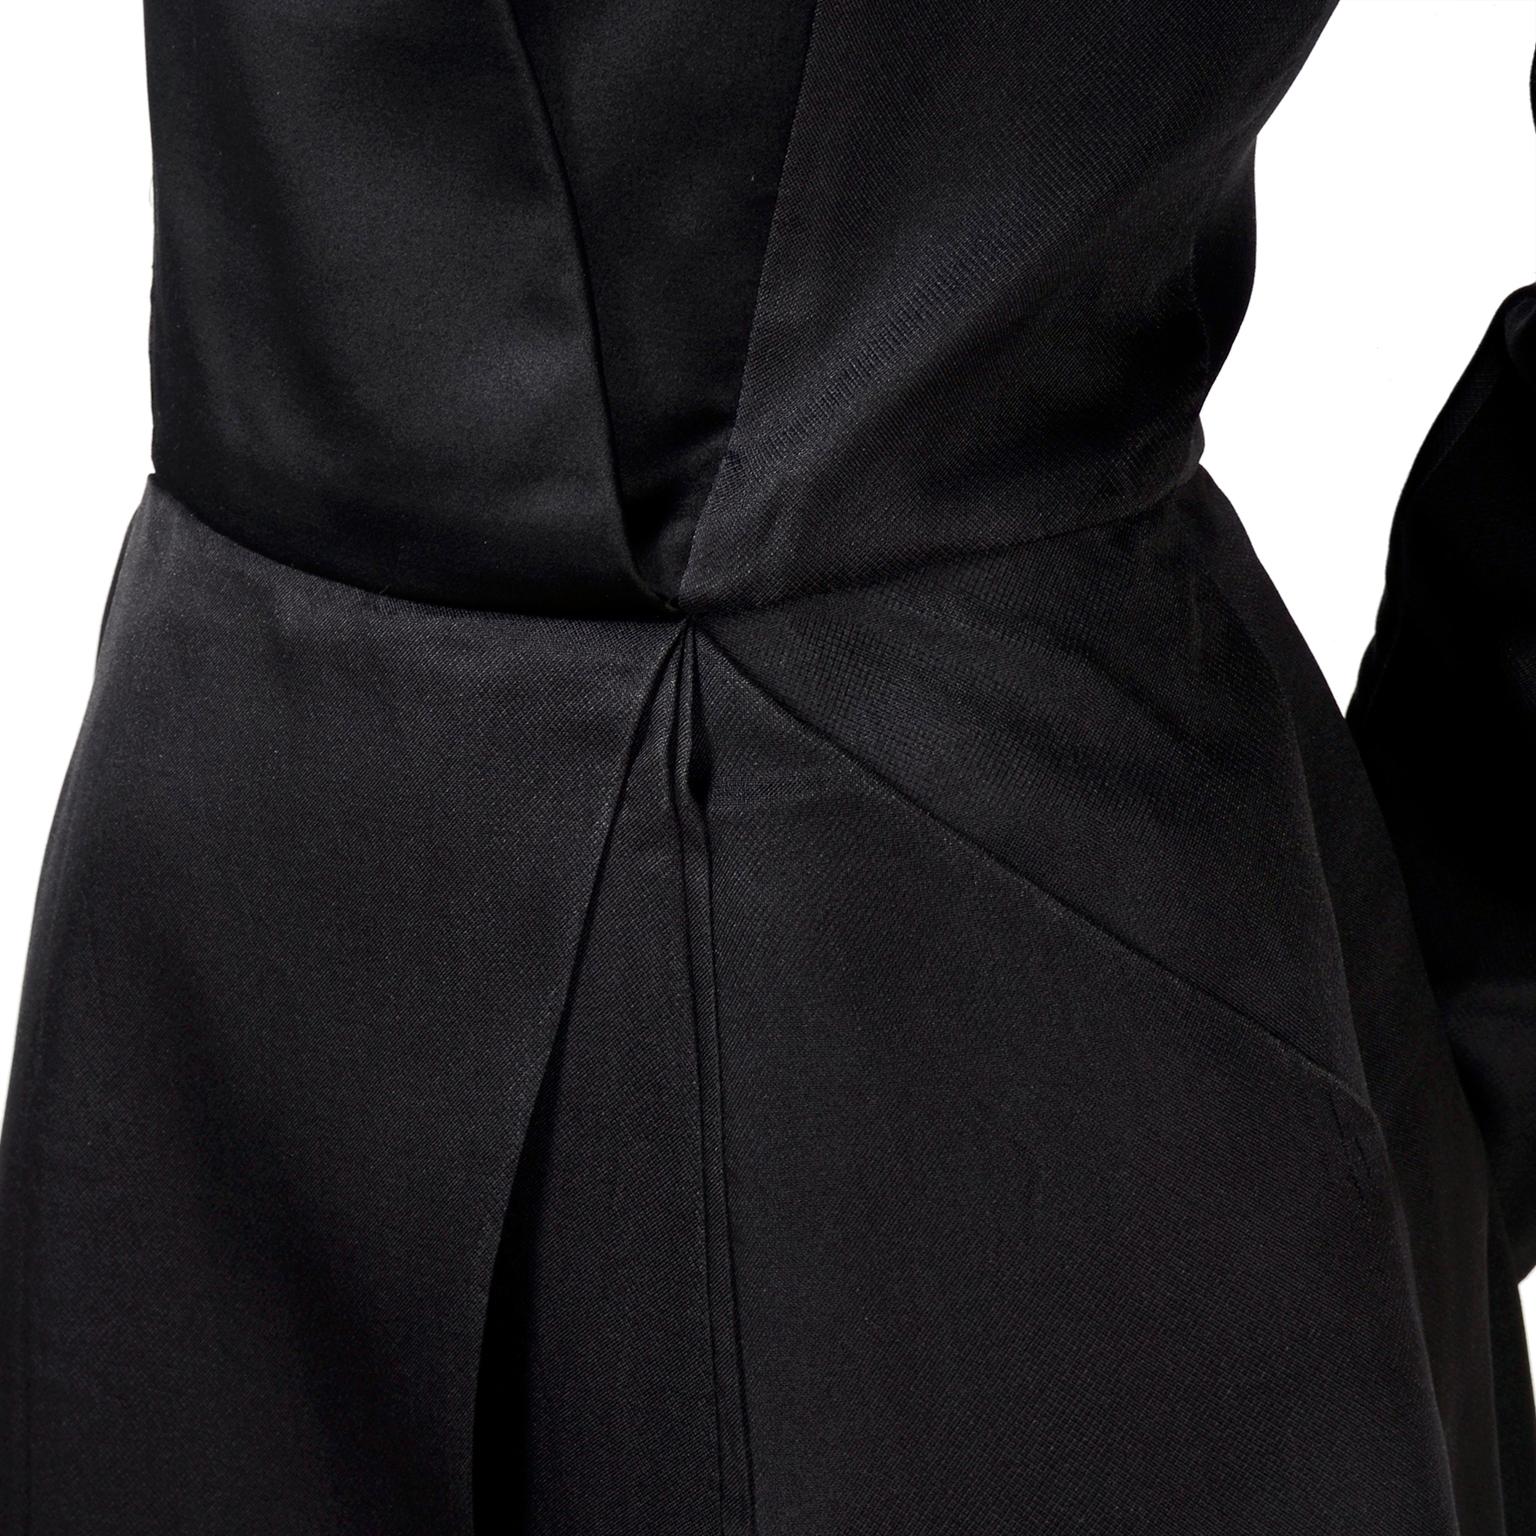 Vintage Black Geoffrey Beene Dress W/ Detailed Origami Folds & Styling 1